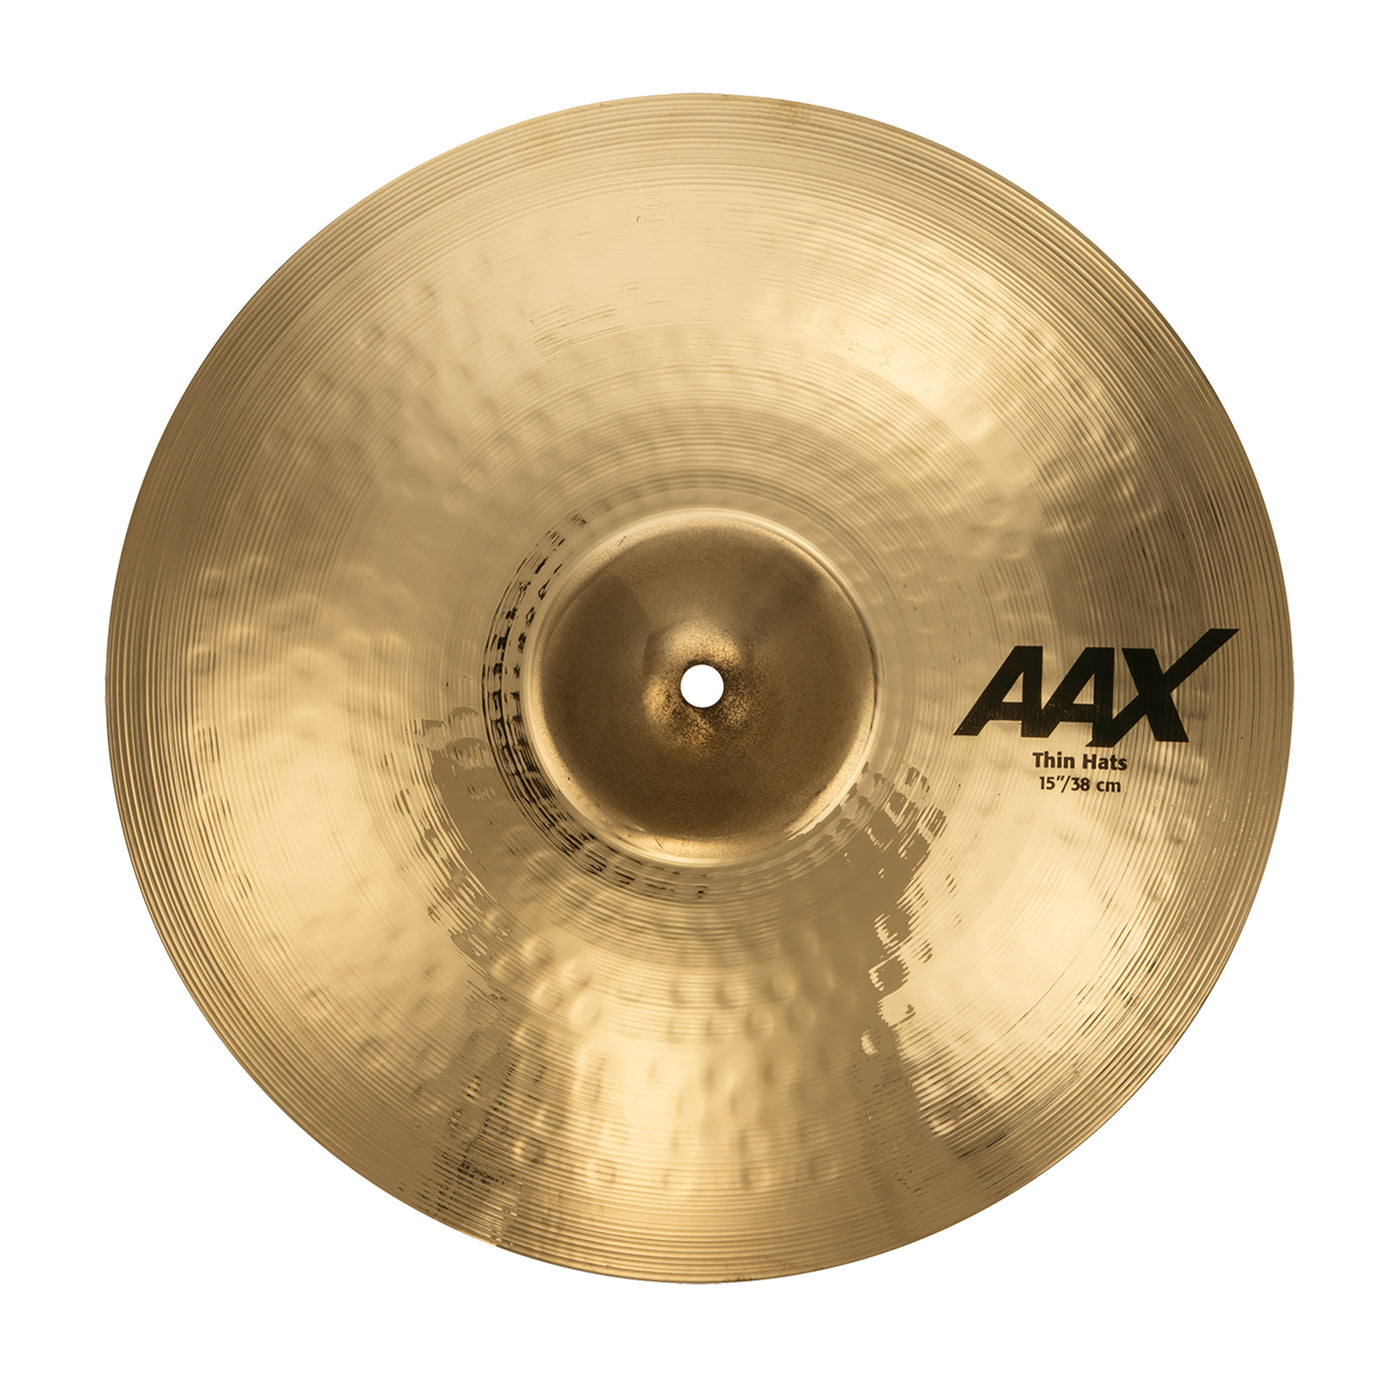 Sabian 15" AAX Thin Hi-Hat Cymbals - Brilliant Finish